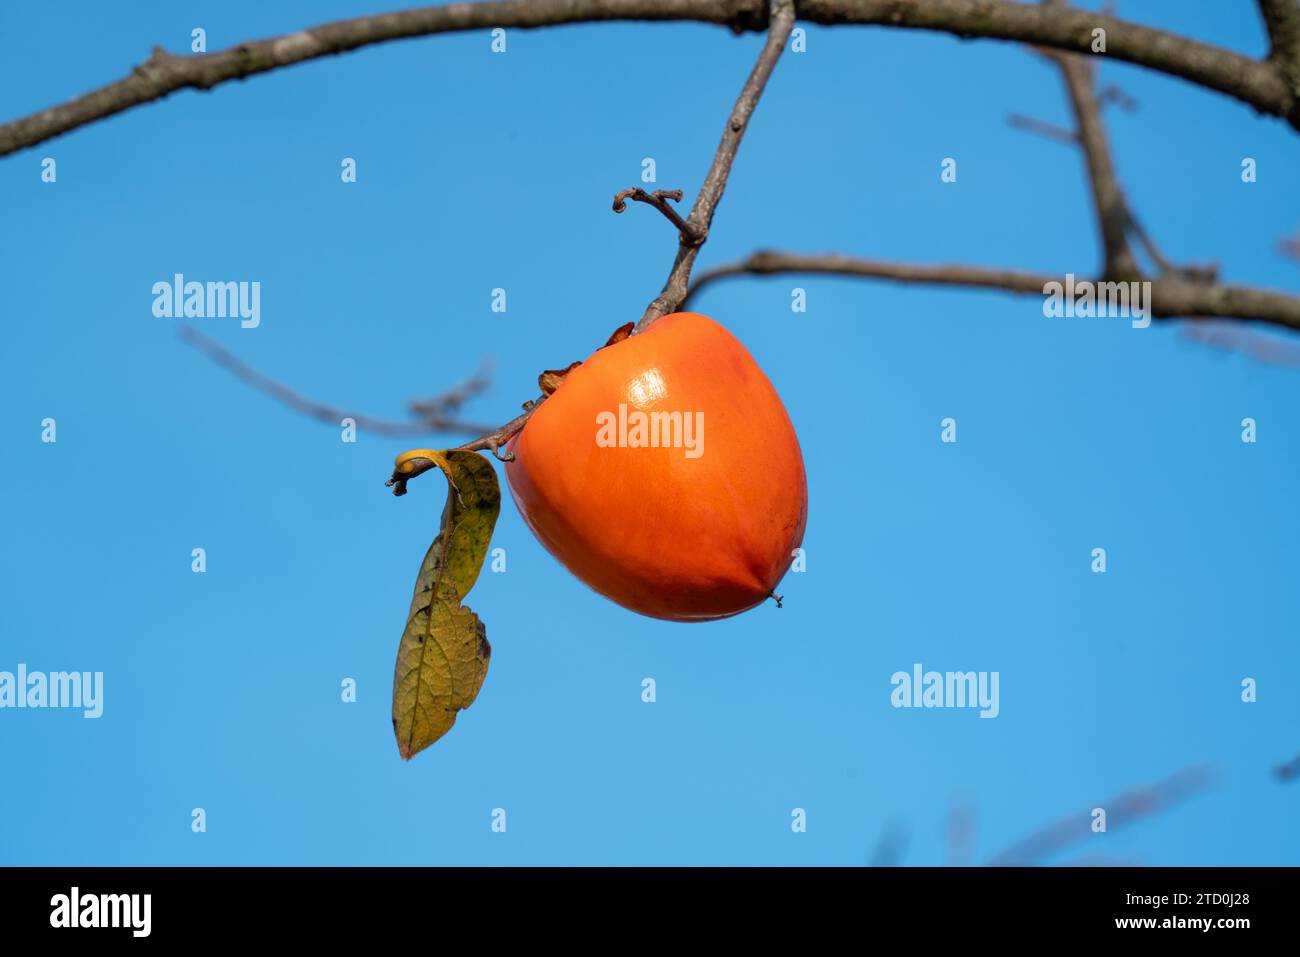 Ripe orange persimmon hanging on a tree branch, autumn harvest season concept. Stock Photo